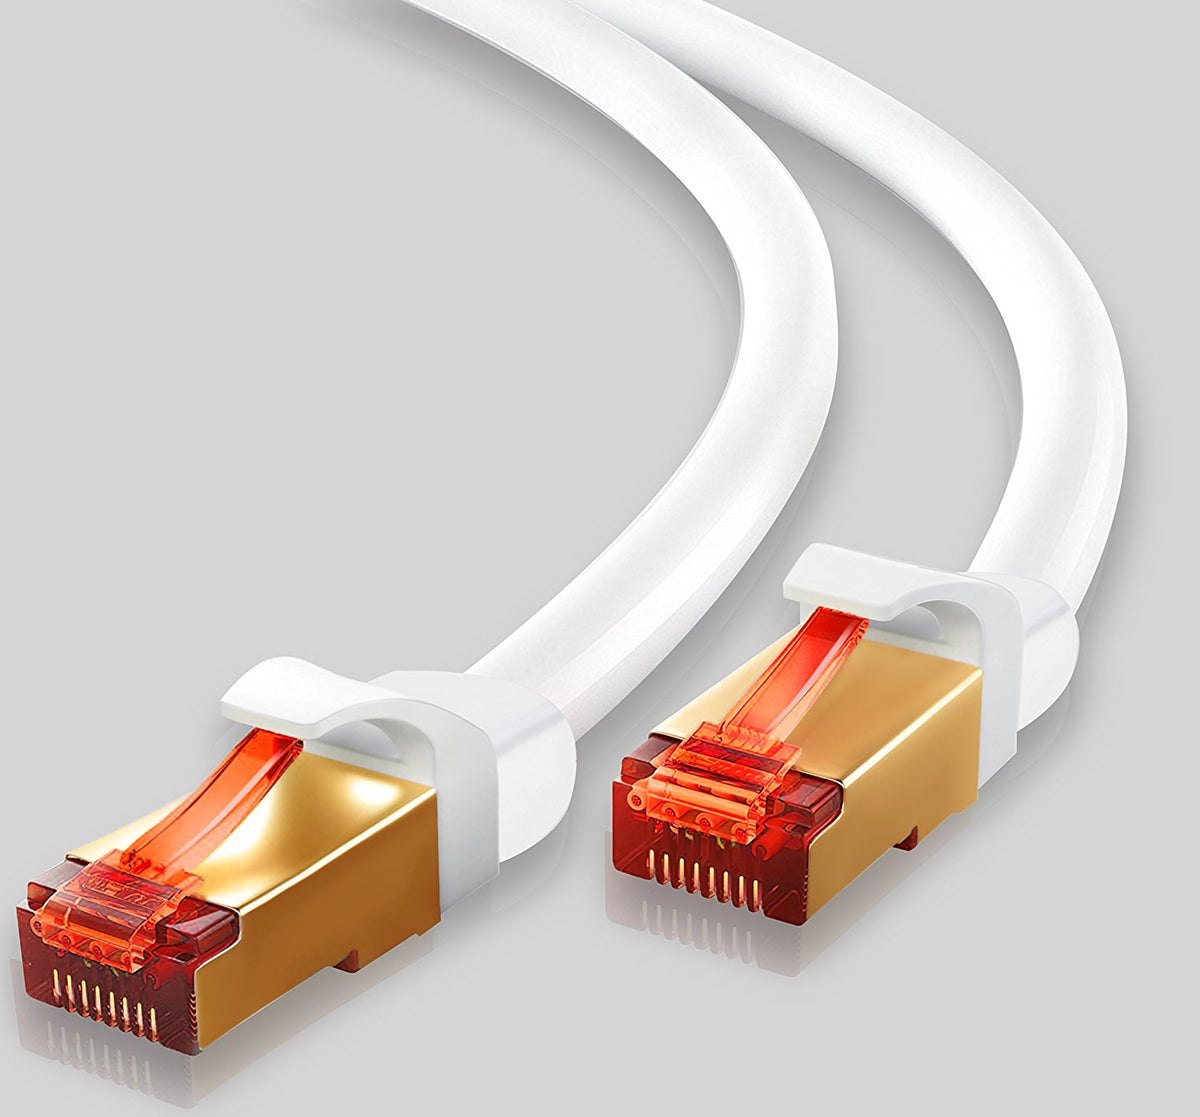 Ethernet Gigabit Lan Network Cable (RJ45) Advanced CAT 7 |Gold Connectors| 10Gbps 600MHz |10/100/1000Mbit/s | Patch cable |STP| compatible with CAT.5 / CAT.5e / CAT.6 | Switch/Router/Modem/Patch panel / Access Point / patch fields | 1M IBRA Round White